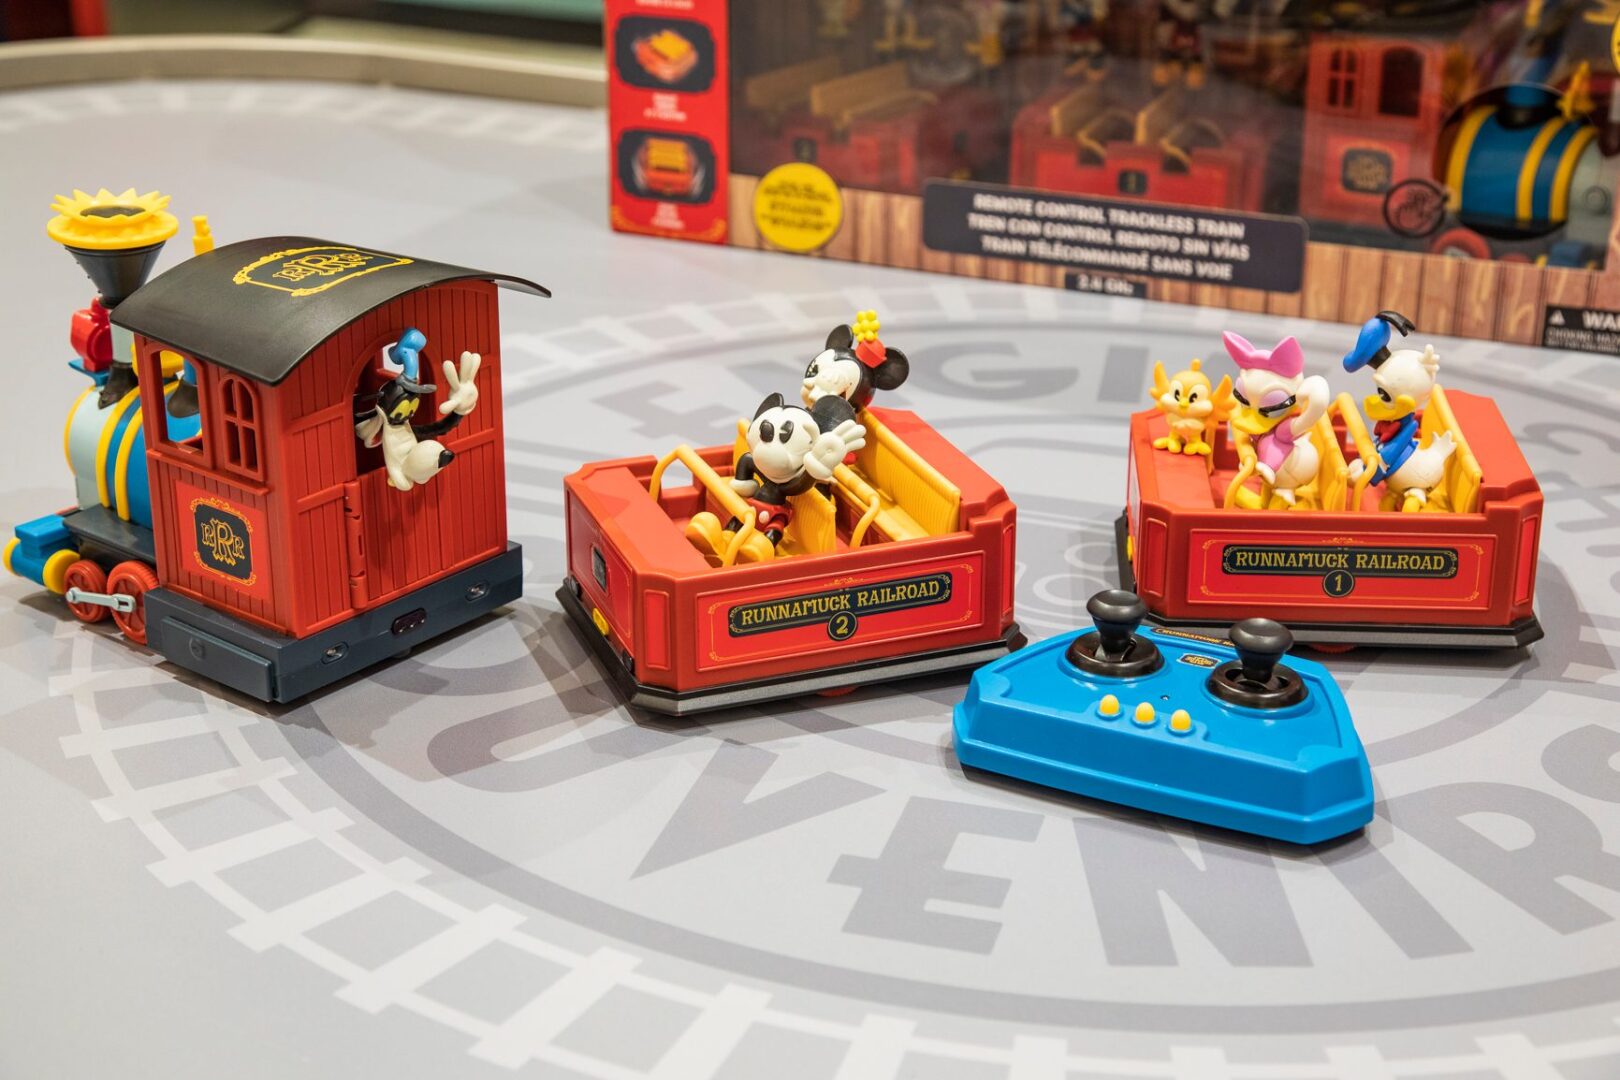 New Mickey & Minnie’s Runaway Railway Remote Control Trackless Toy Coming to Disneyland